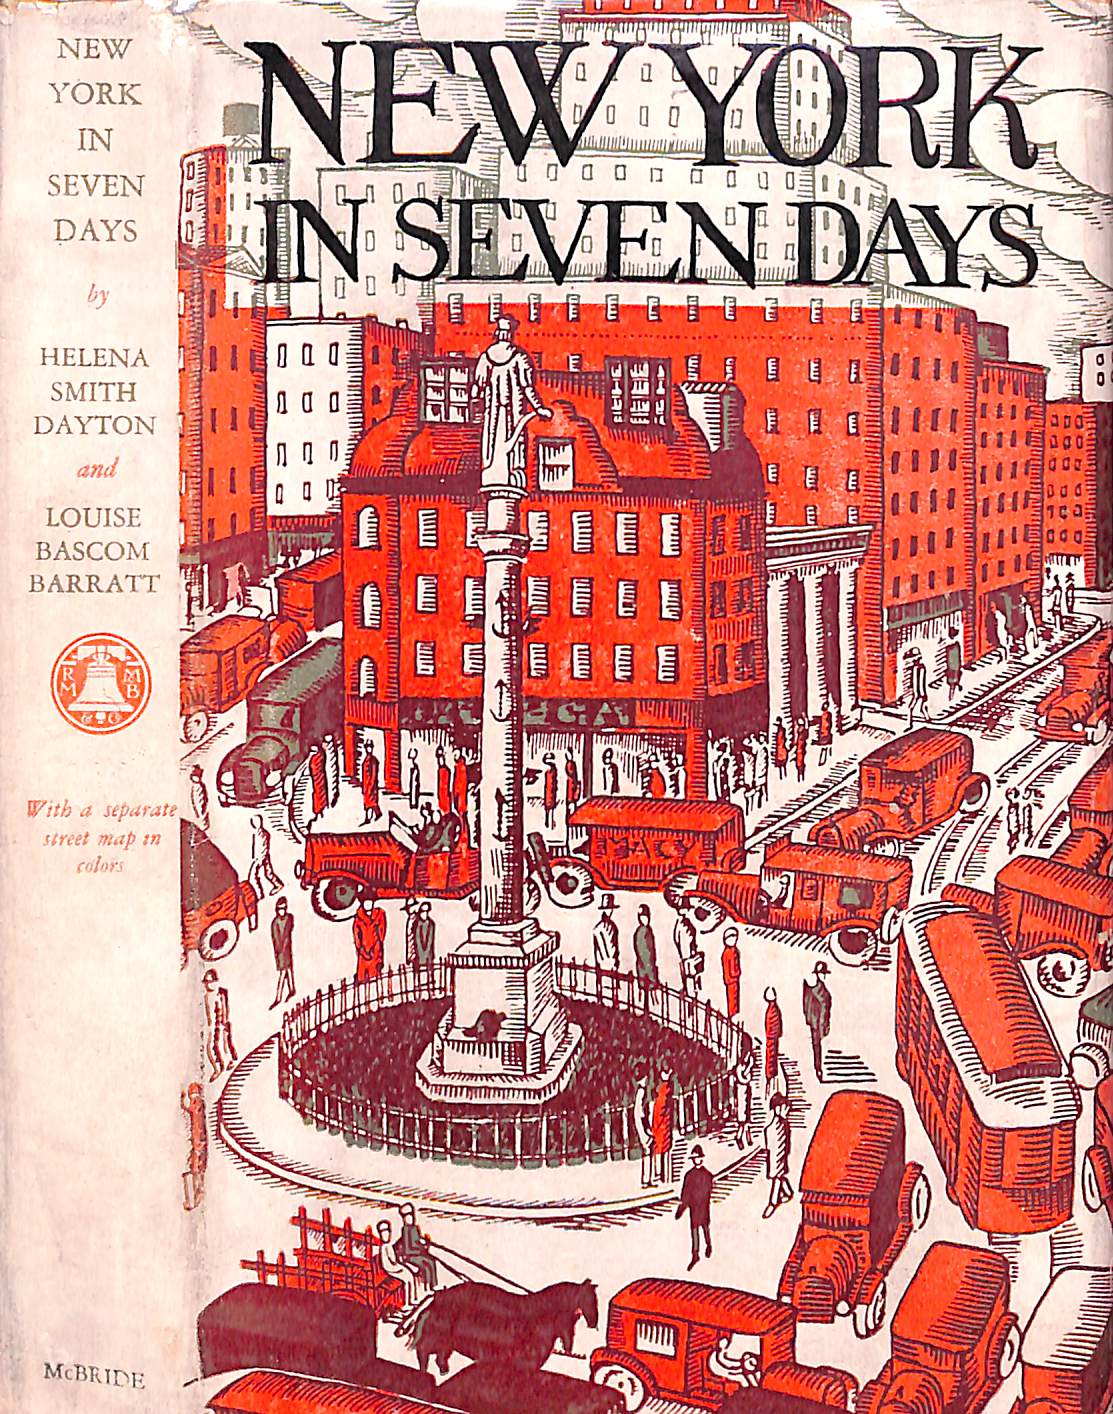 "New York In Seven Days" 1926 DAYTON, Helena Smith and BARRATT, Louise Bascom (SOLD)